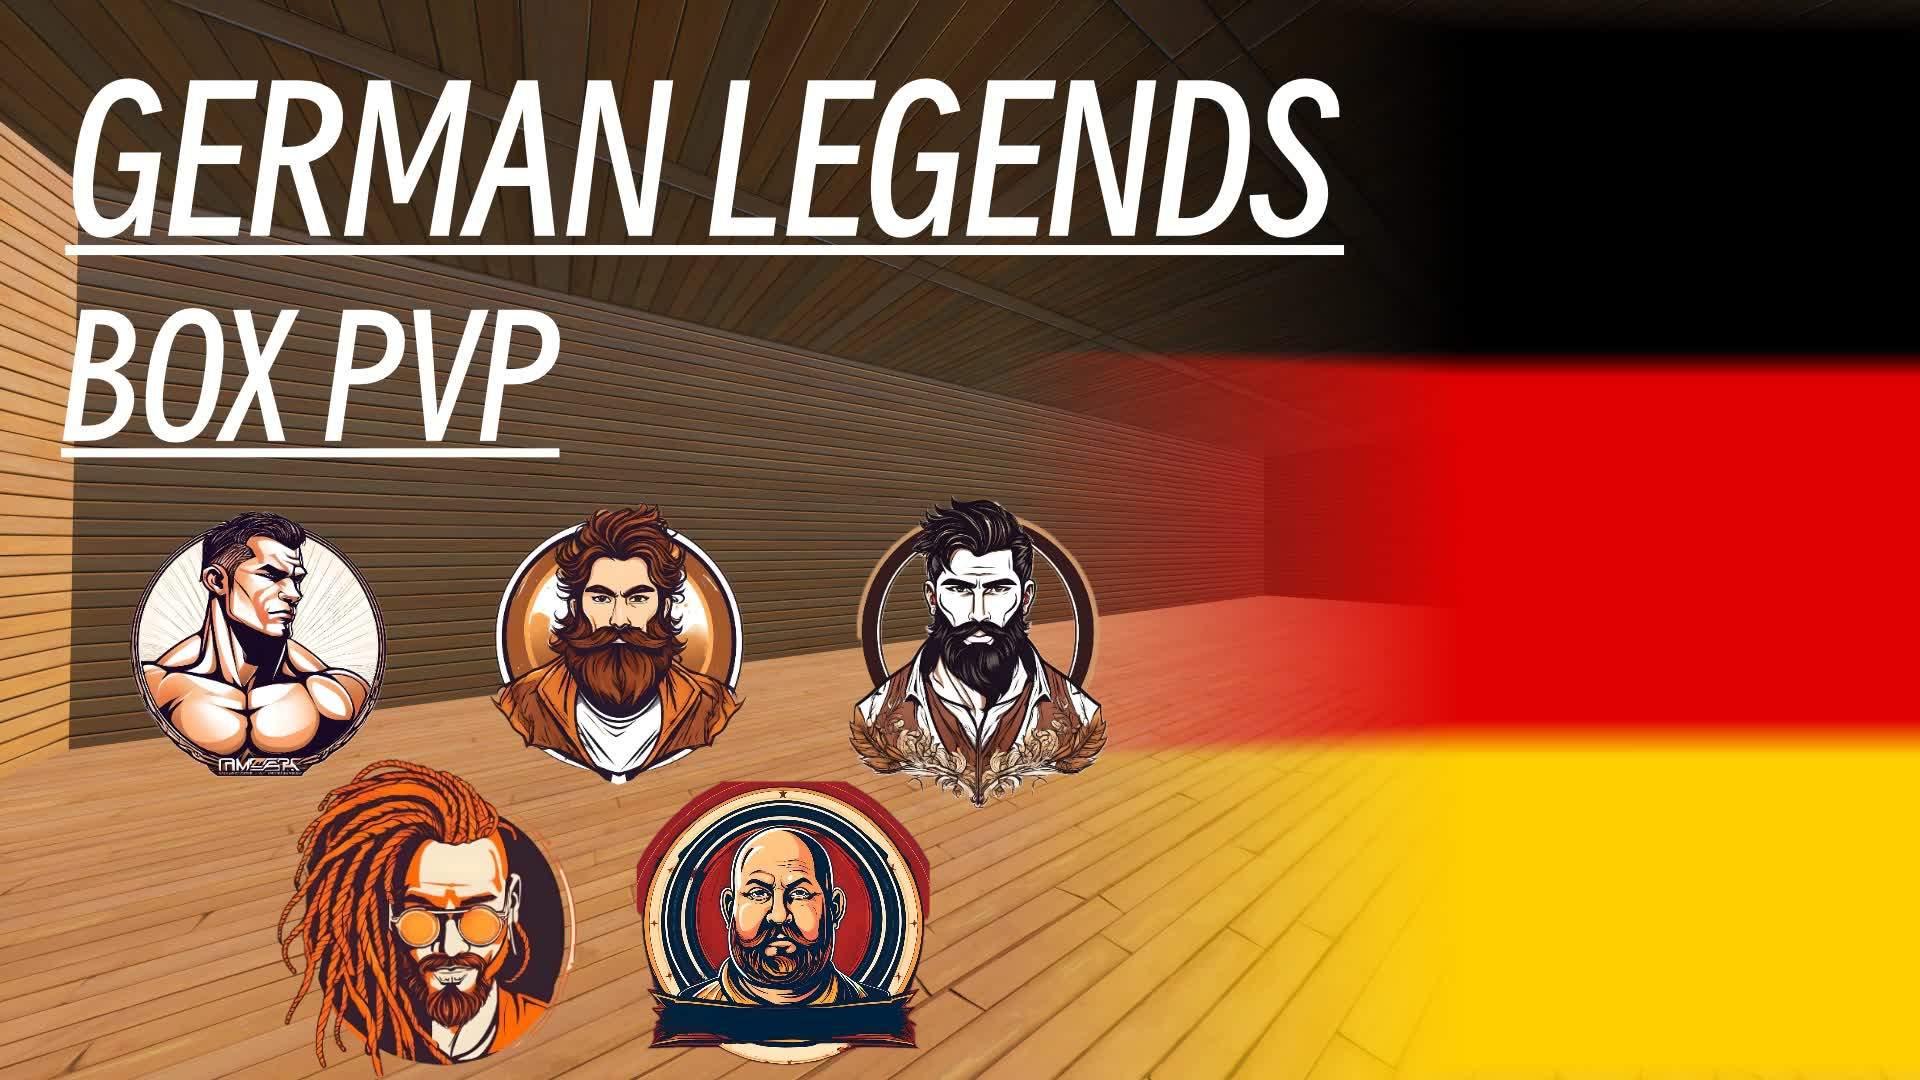 German Legends Boxfight